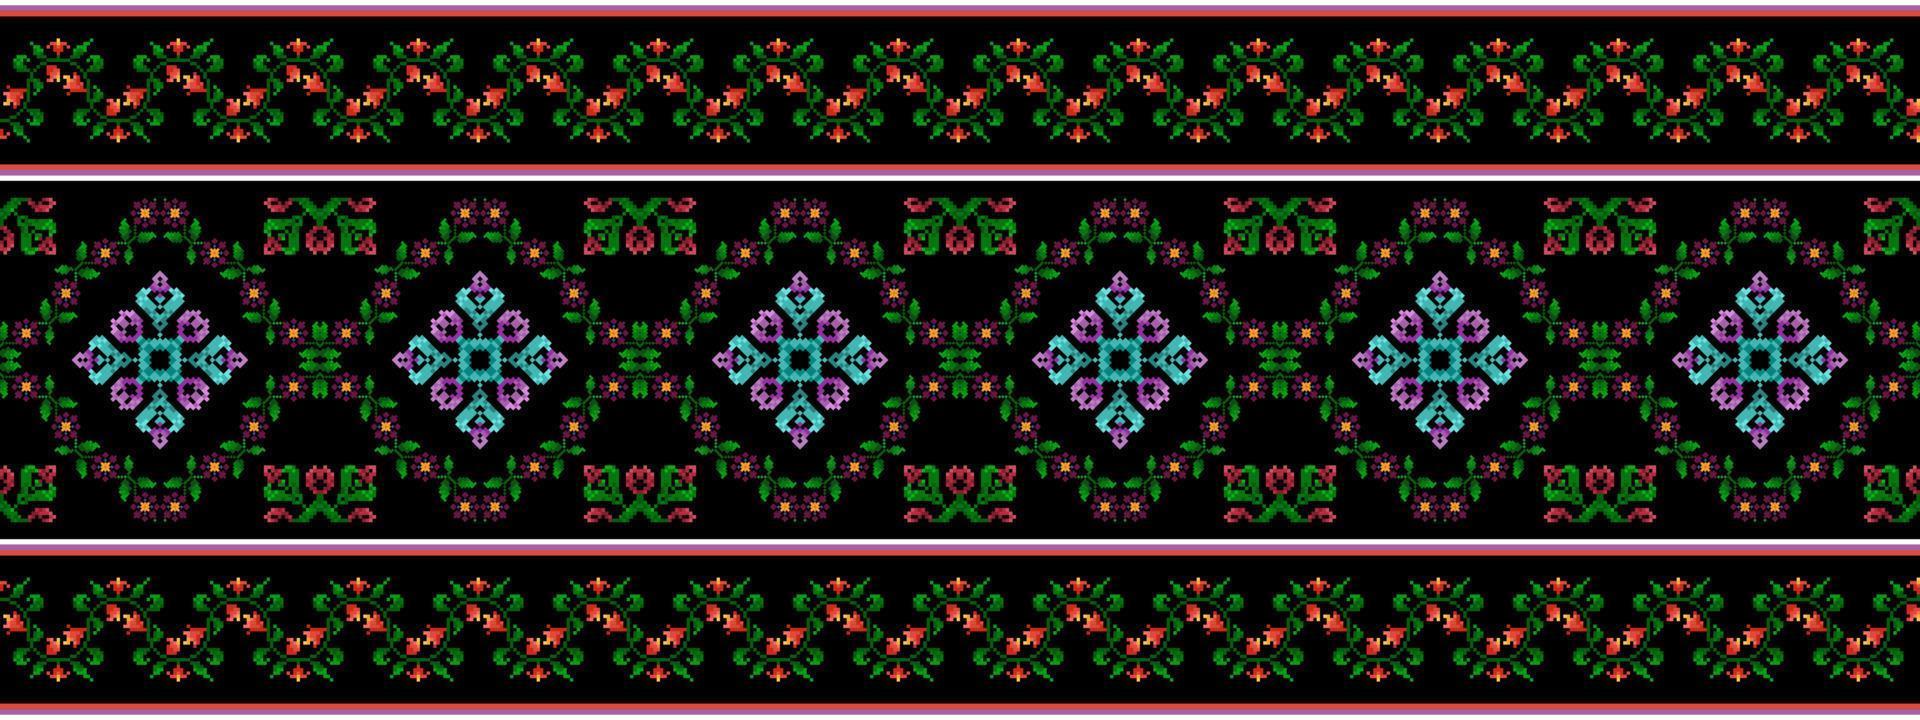 ikat etnisk sömlös mönster dekoration design. aztec tyg matta boho mandalas textil- dekor tapet. stam- inföding motiv ornament traditionell broderi vektor bakgrund pixel stil